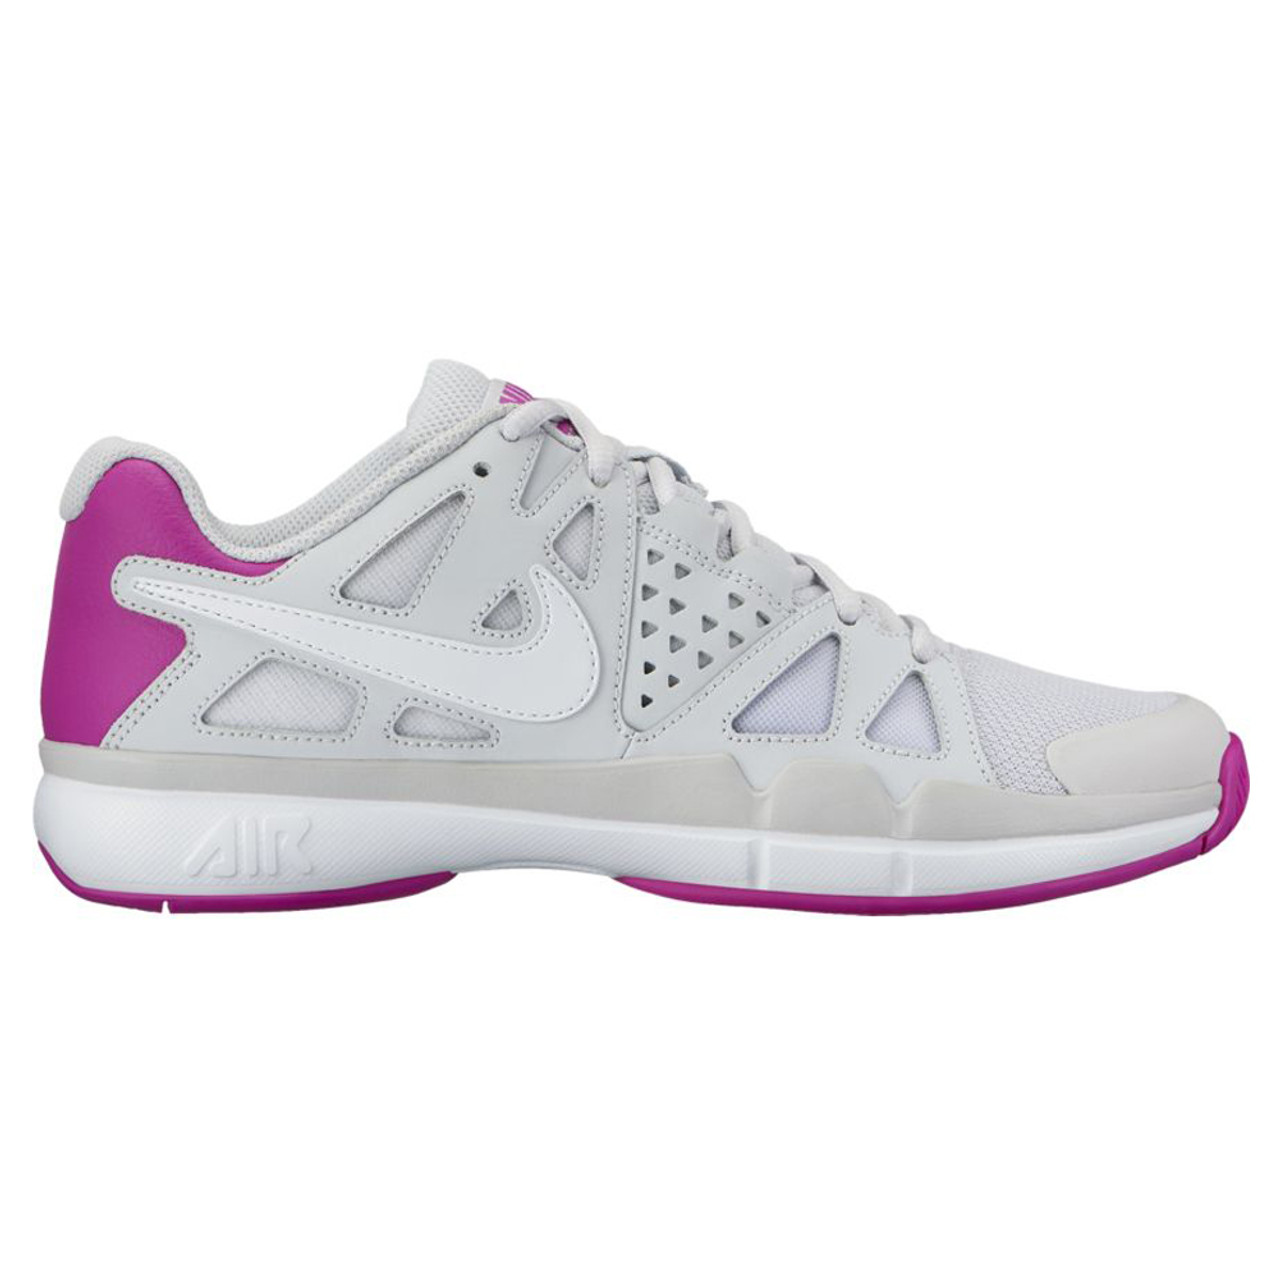 nike women's air vapor advantage tennis shoes